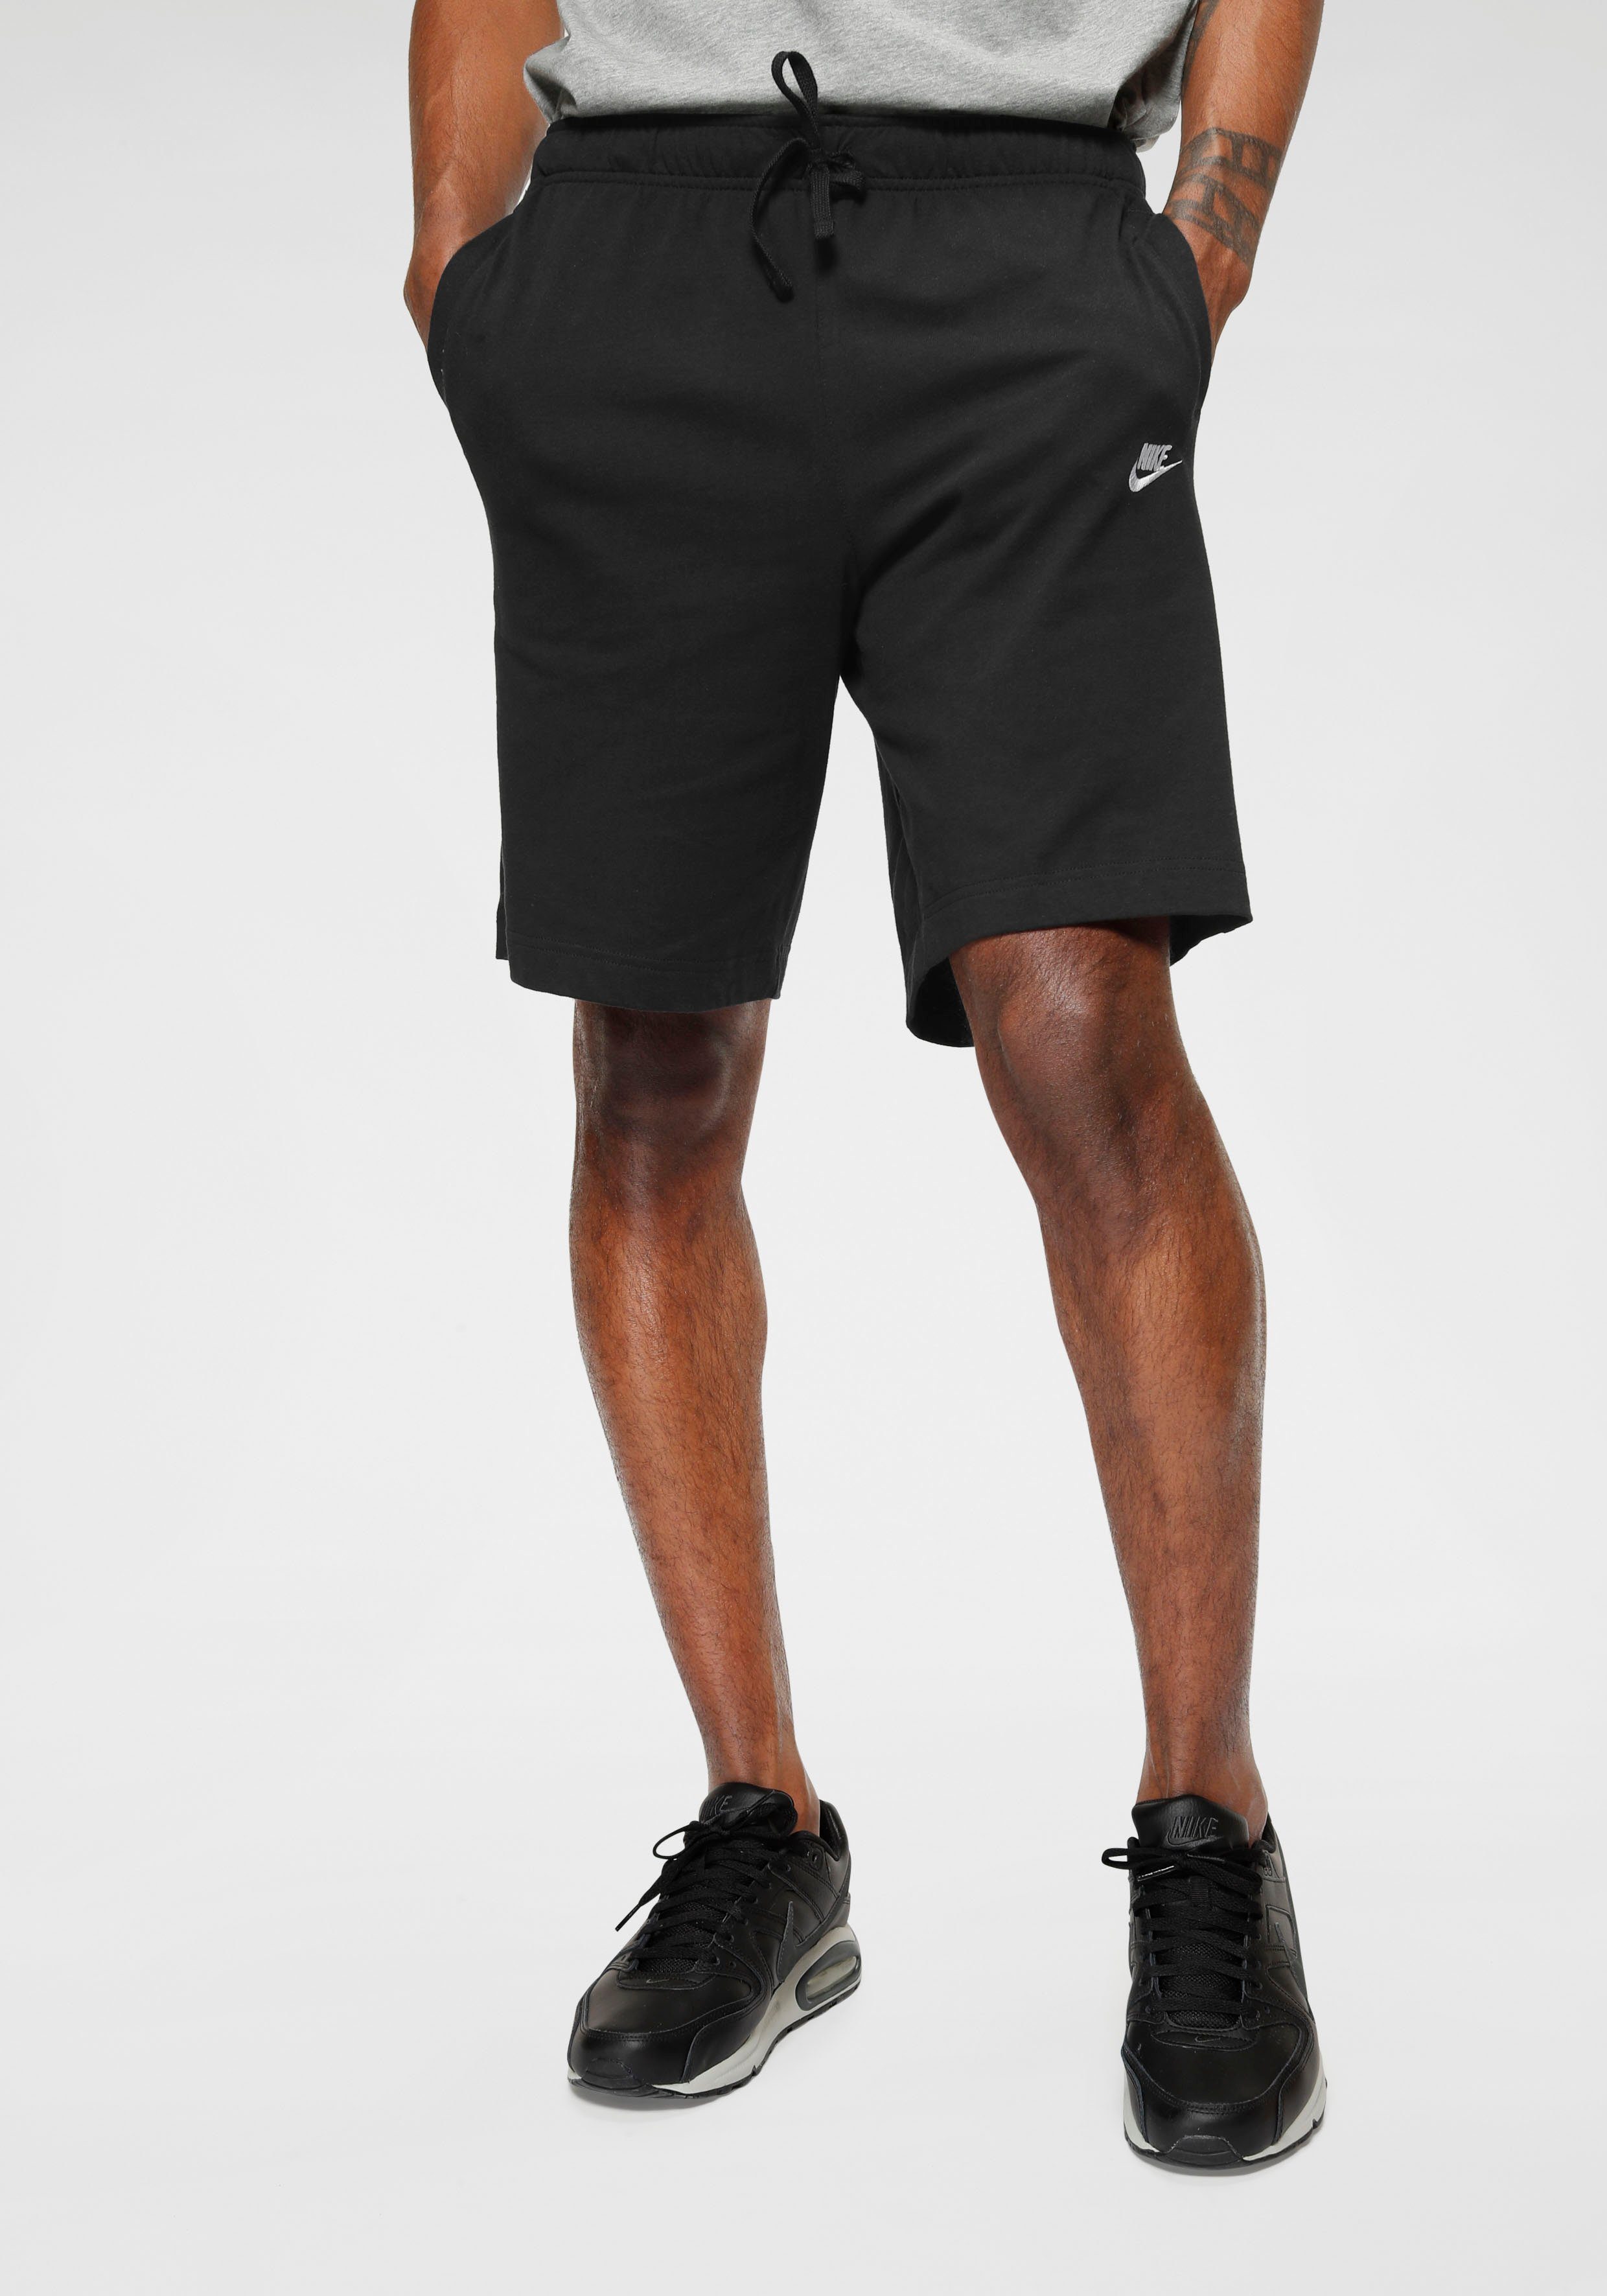 Sportswear Nike schwarz Shorts Shorts Men's Club